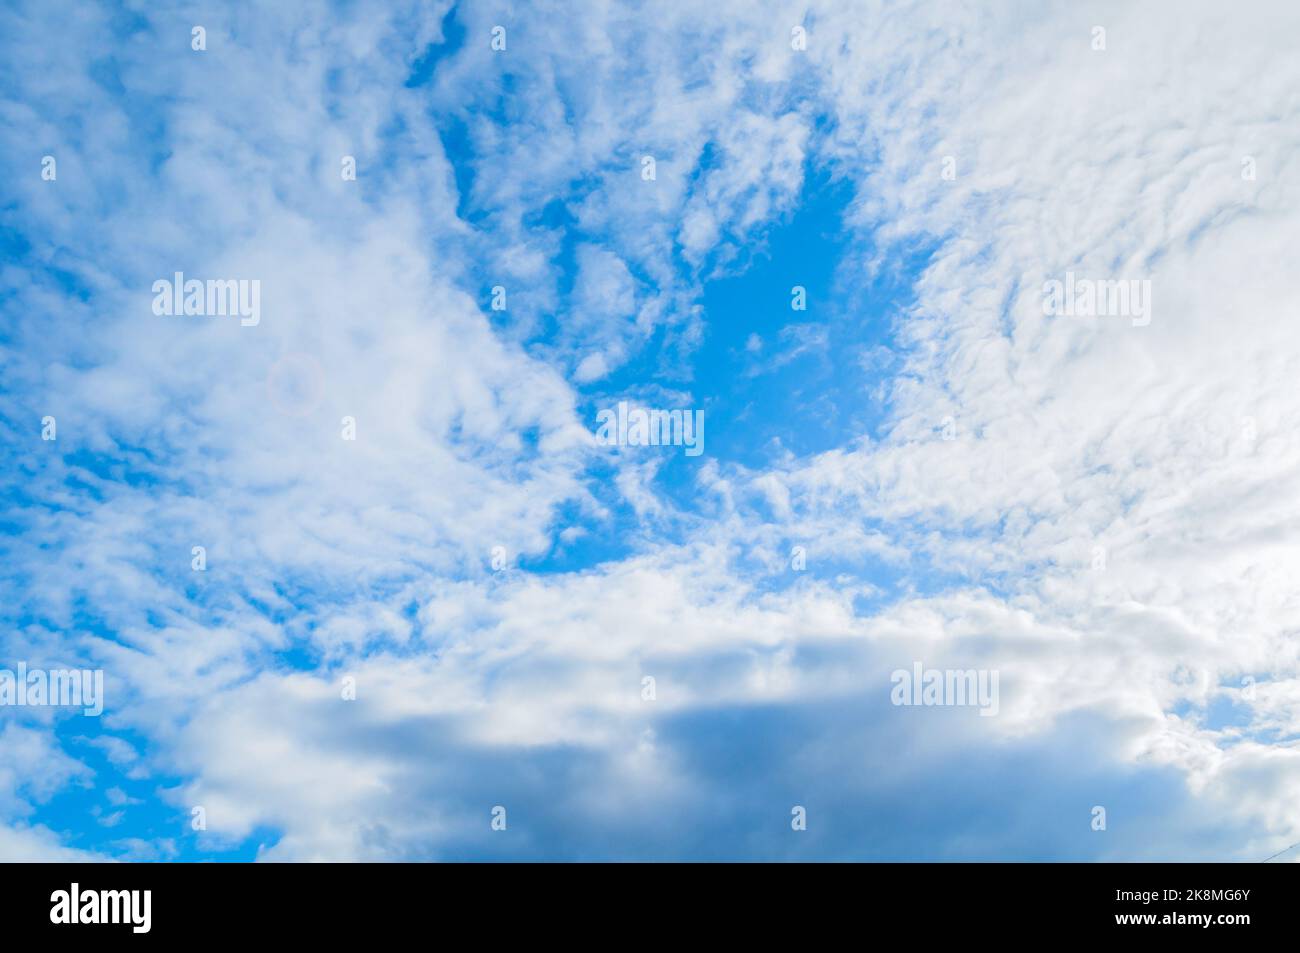 Blue sky background, dramatic vast blue sky landscape scene, panoramic sky scene with scenic white clouds Stock Photo